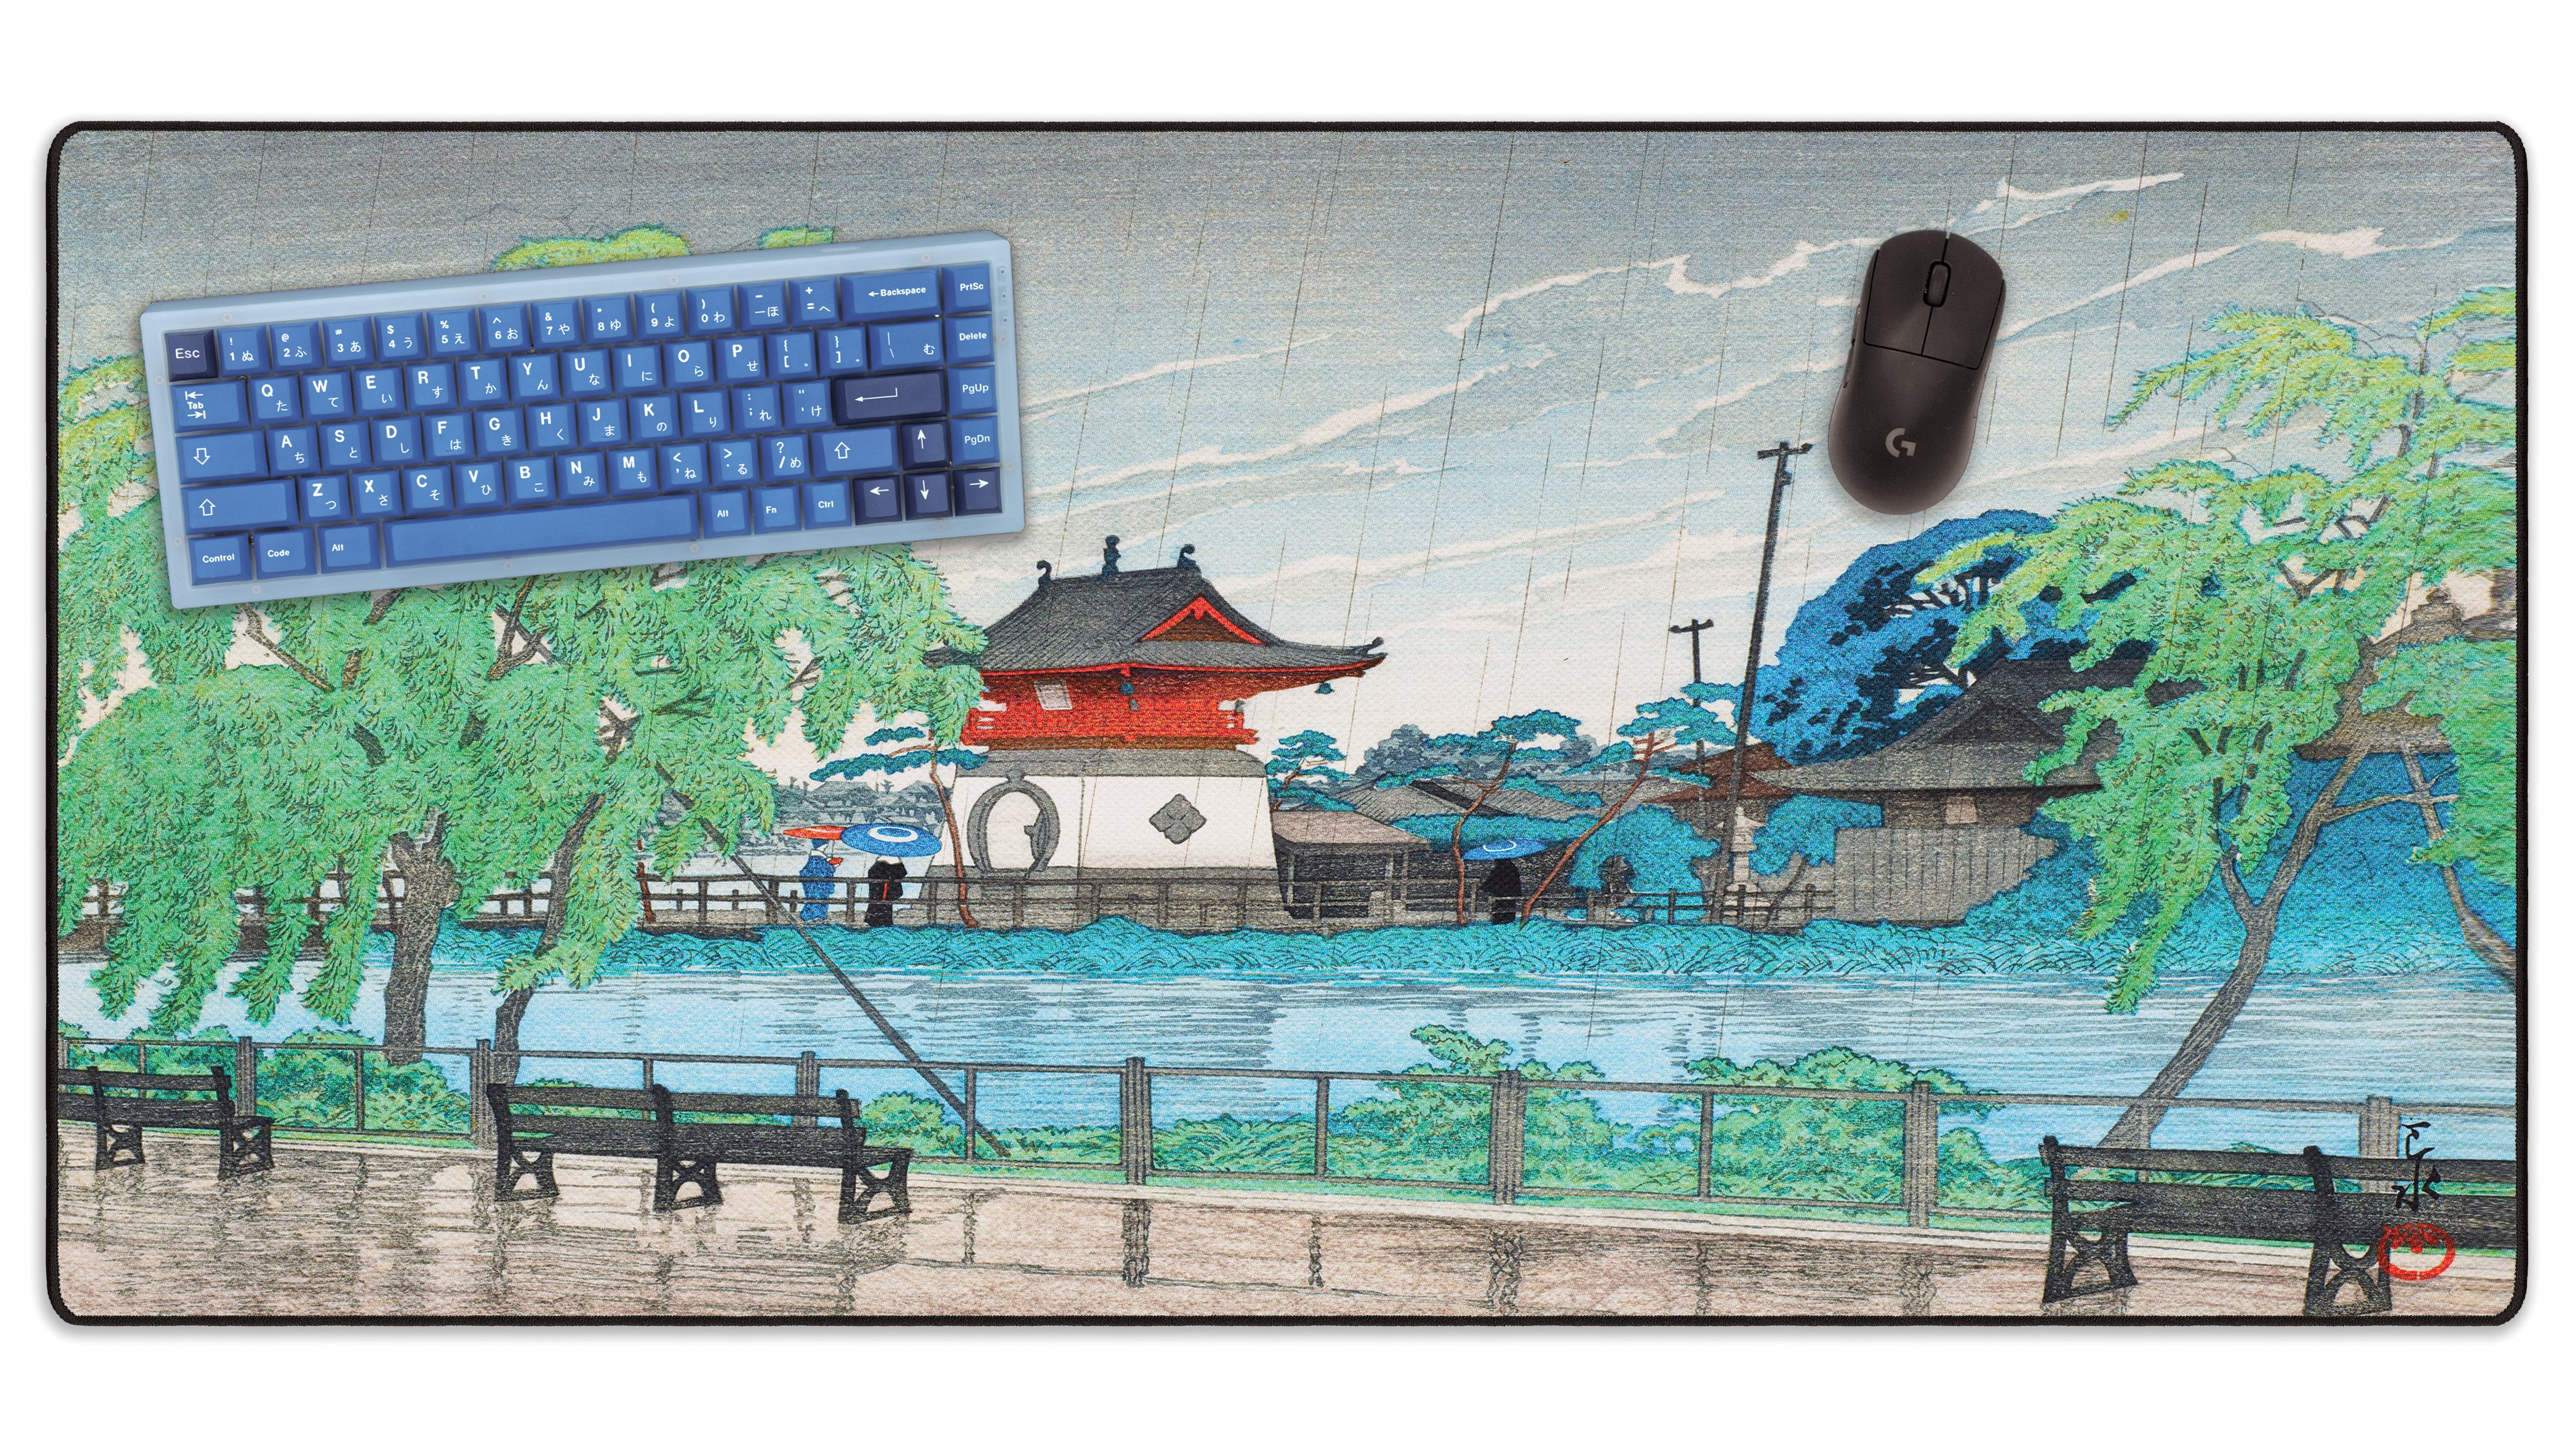 Rain at Shinobazu Pond, by Hasui - The Mousepad Company